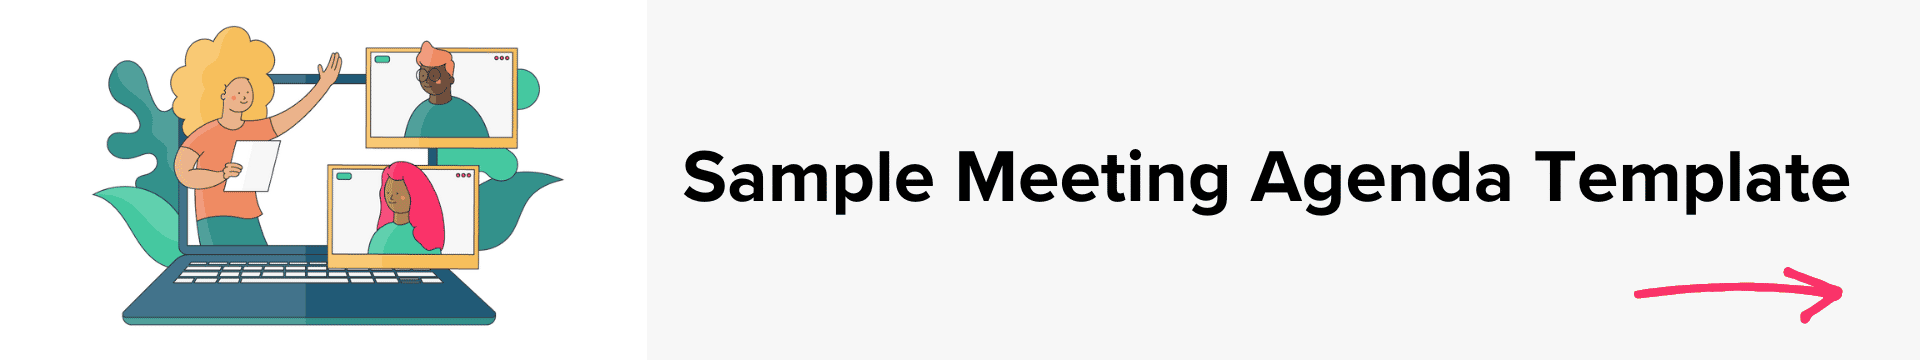 F4S sample meeting agenda template